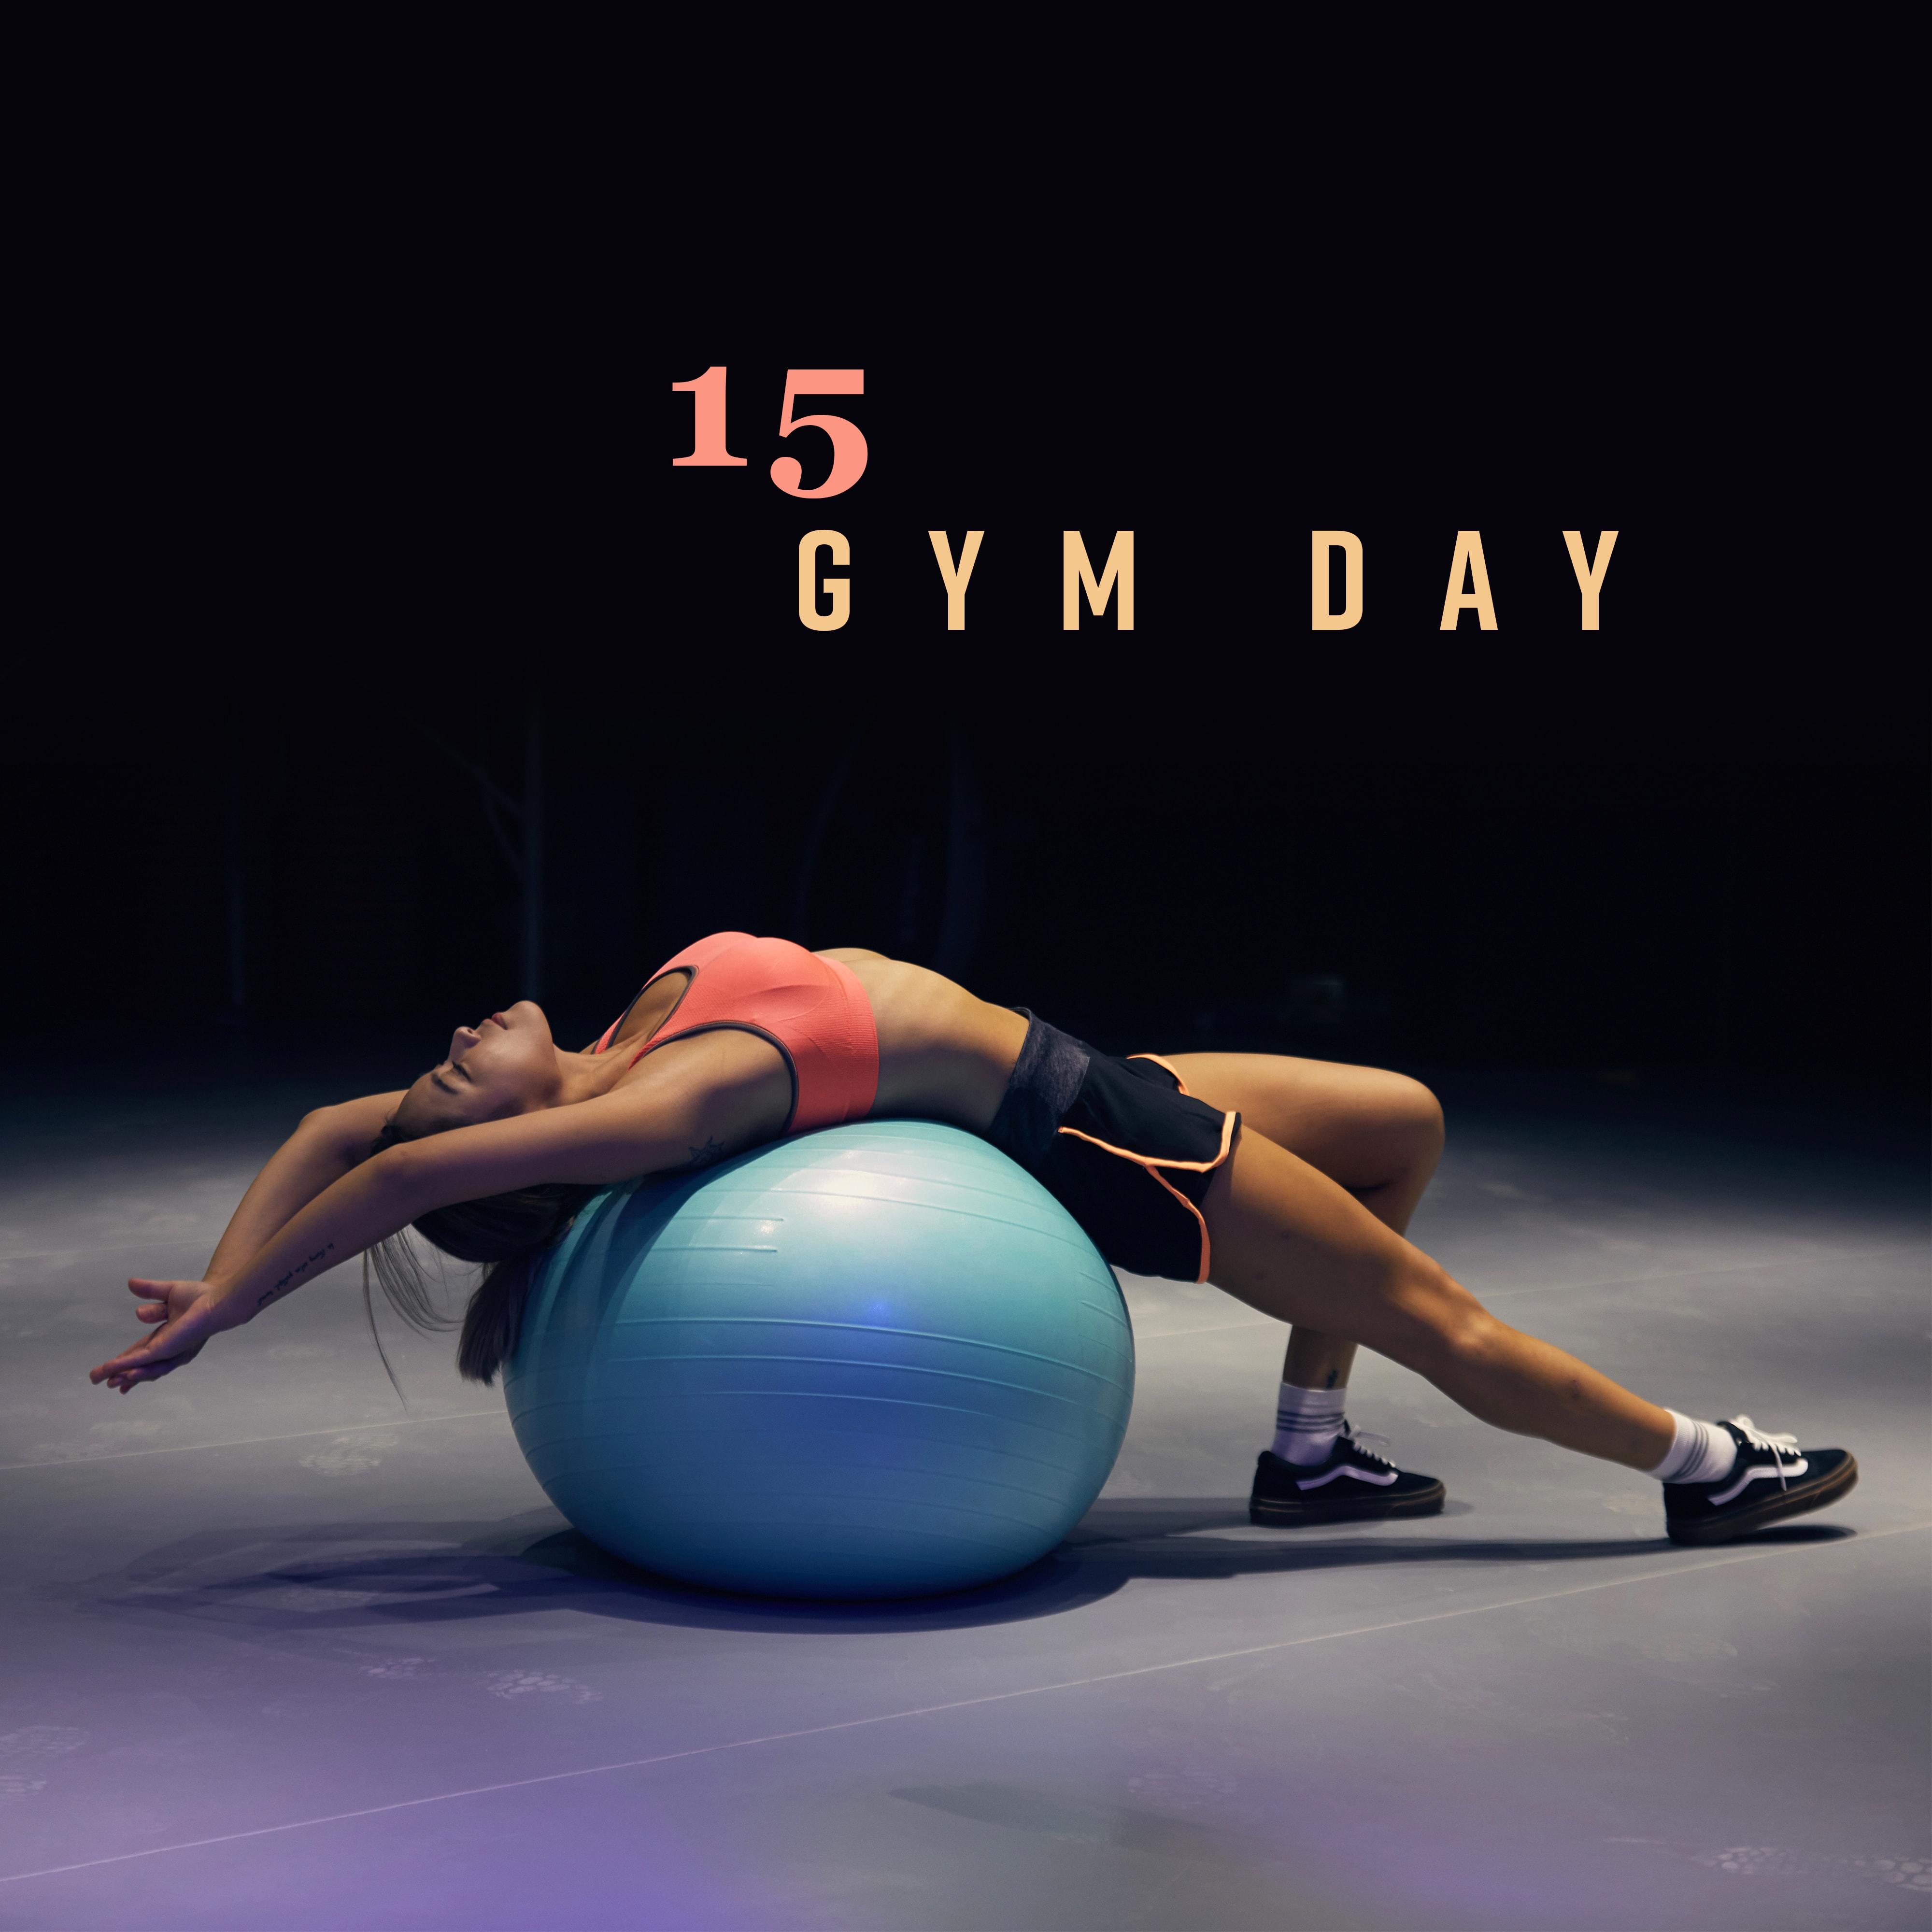 15 Gym Day